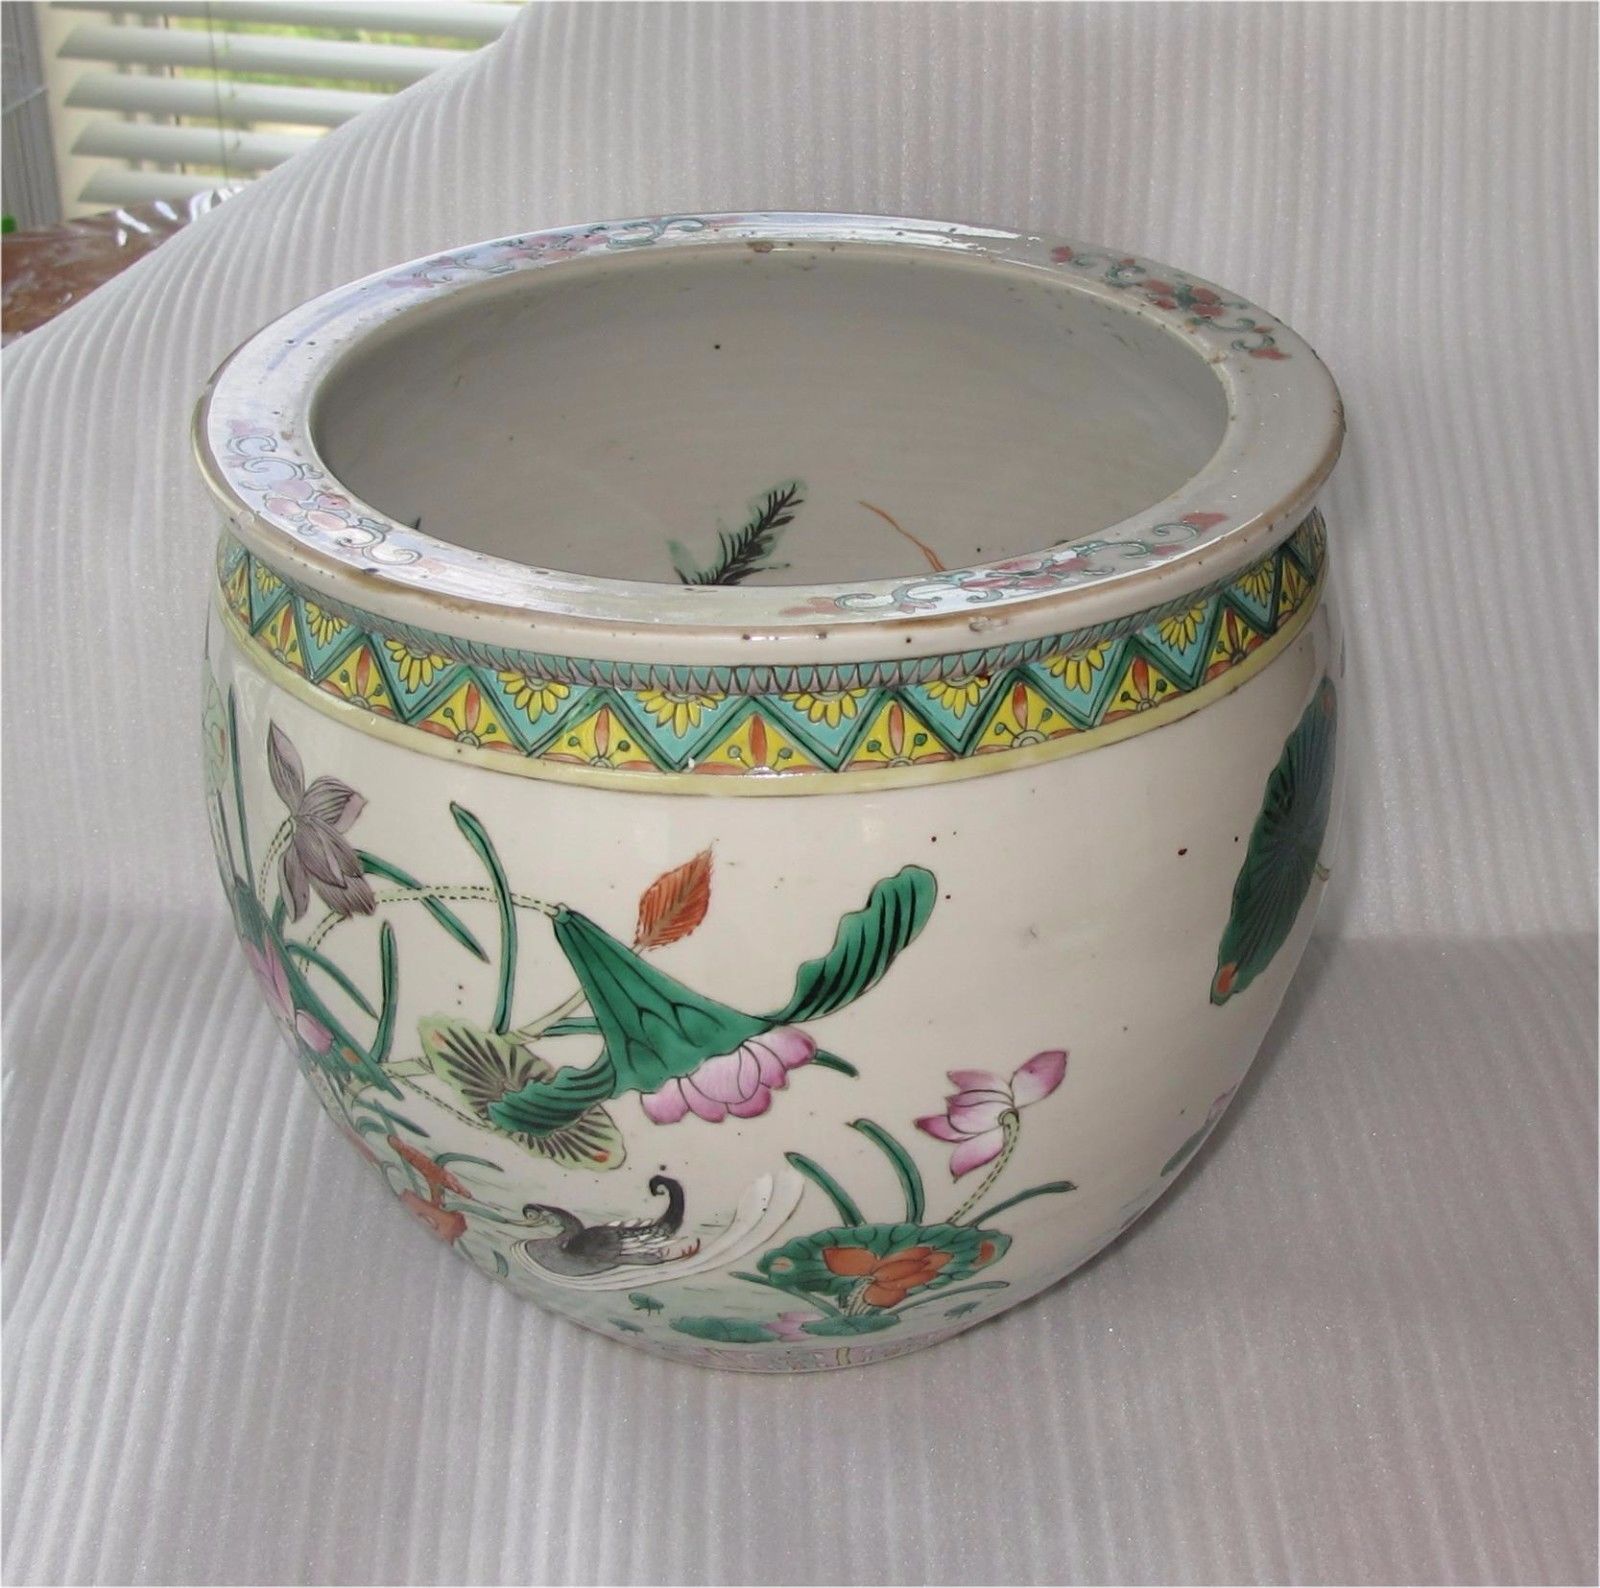 1800's Chinese Export Porcelain Fish Bowl Famille Rose enamel Duck Pond Qing